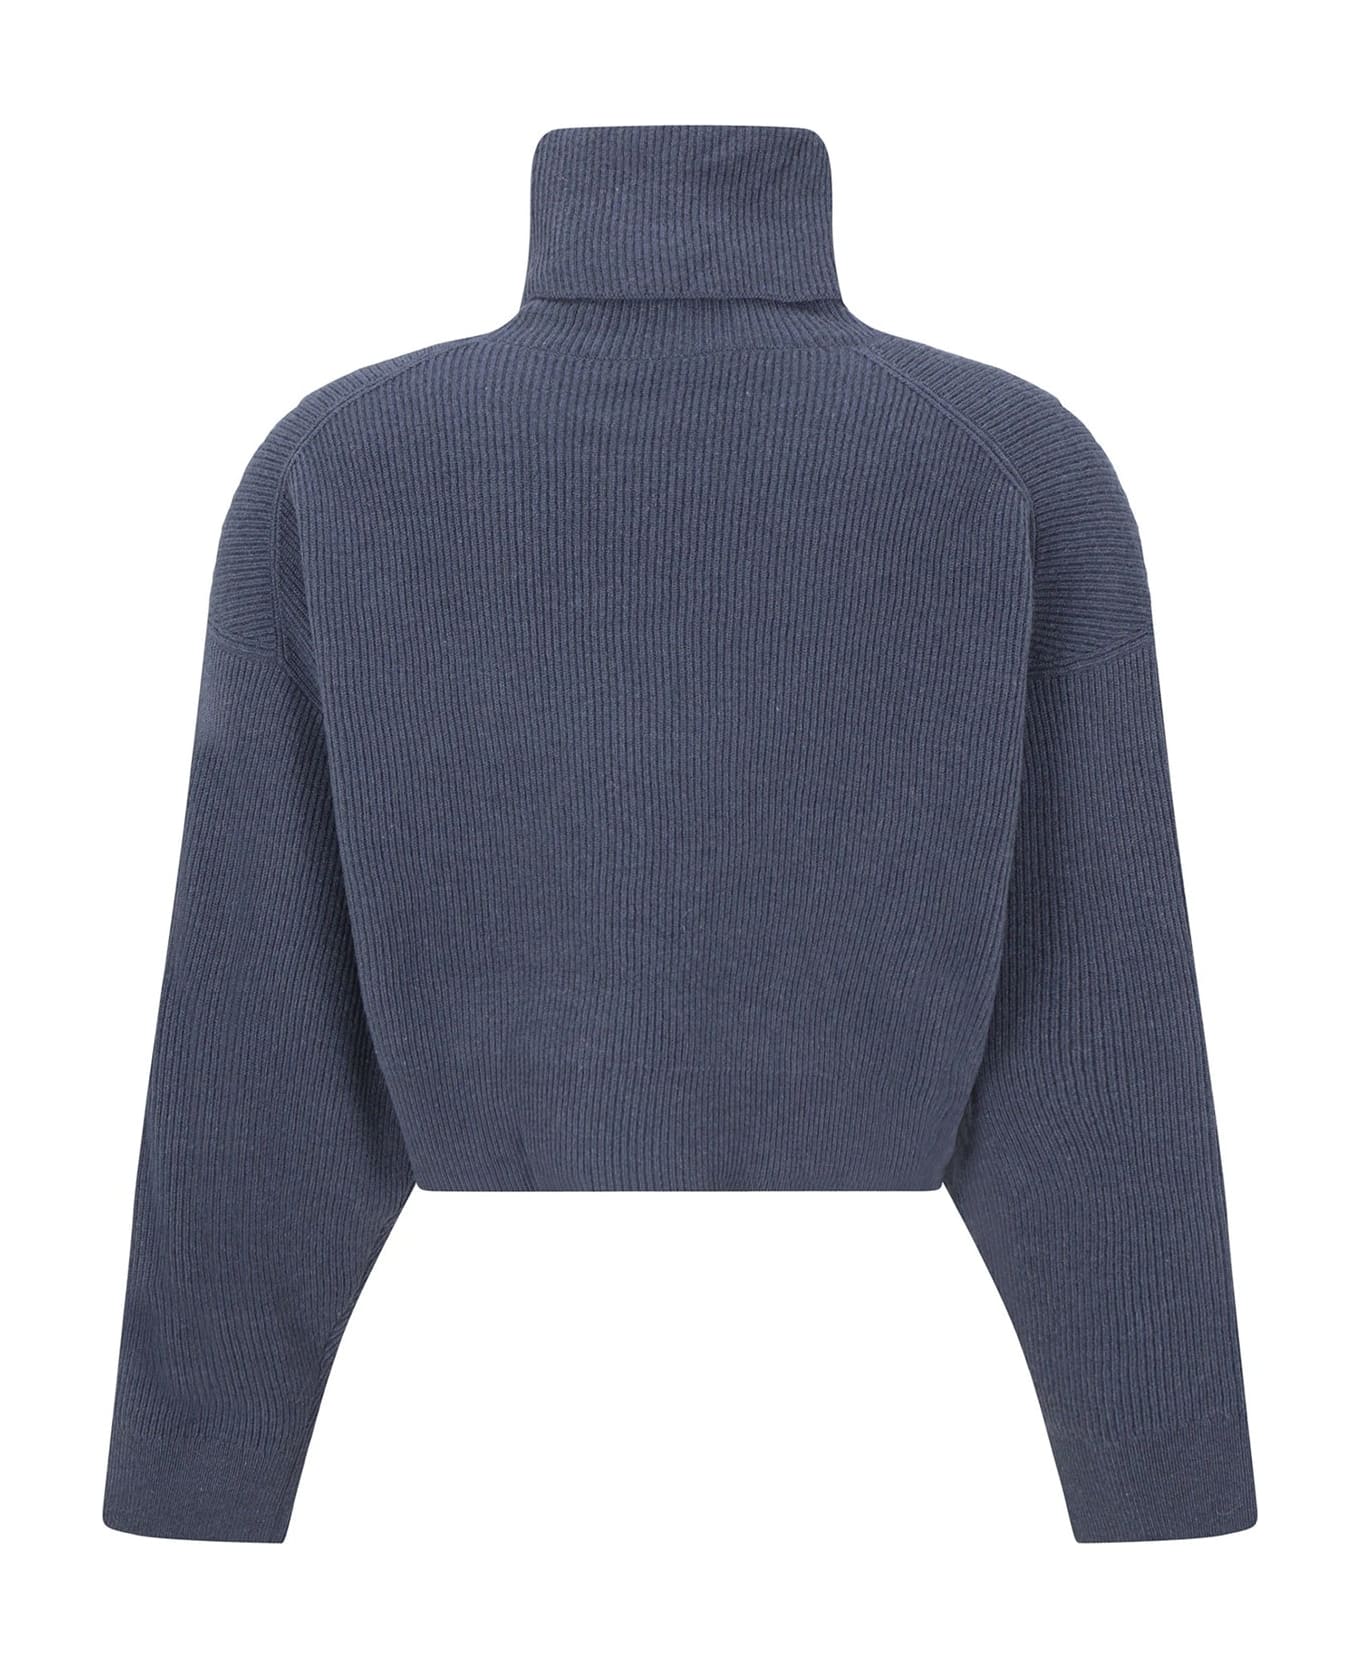 Brunello Cucinelli Turtleneck Sweater - Blue ニットウェア